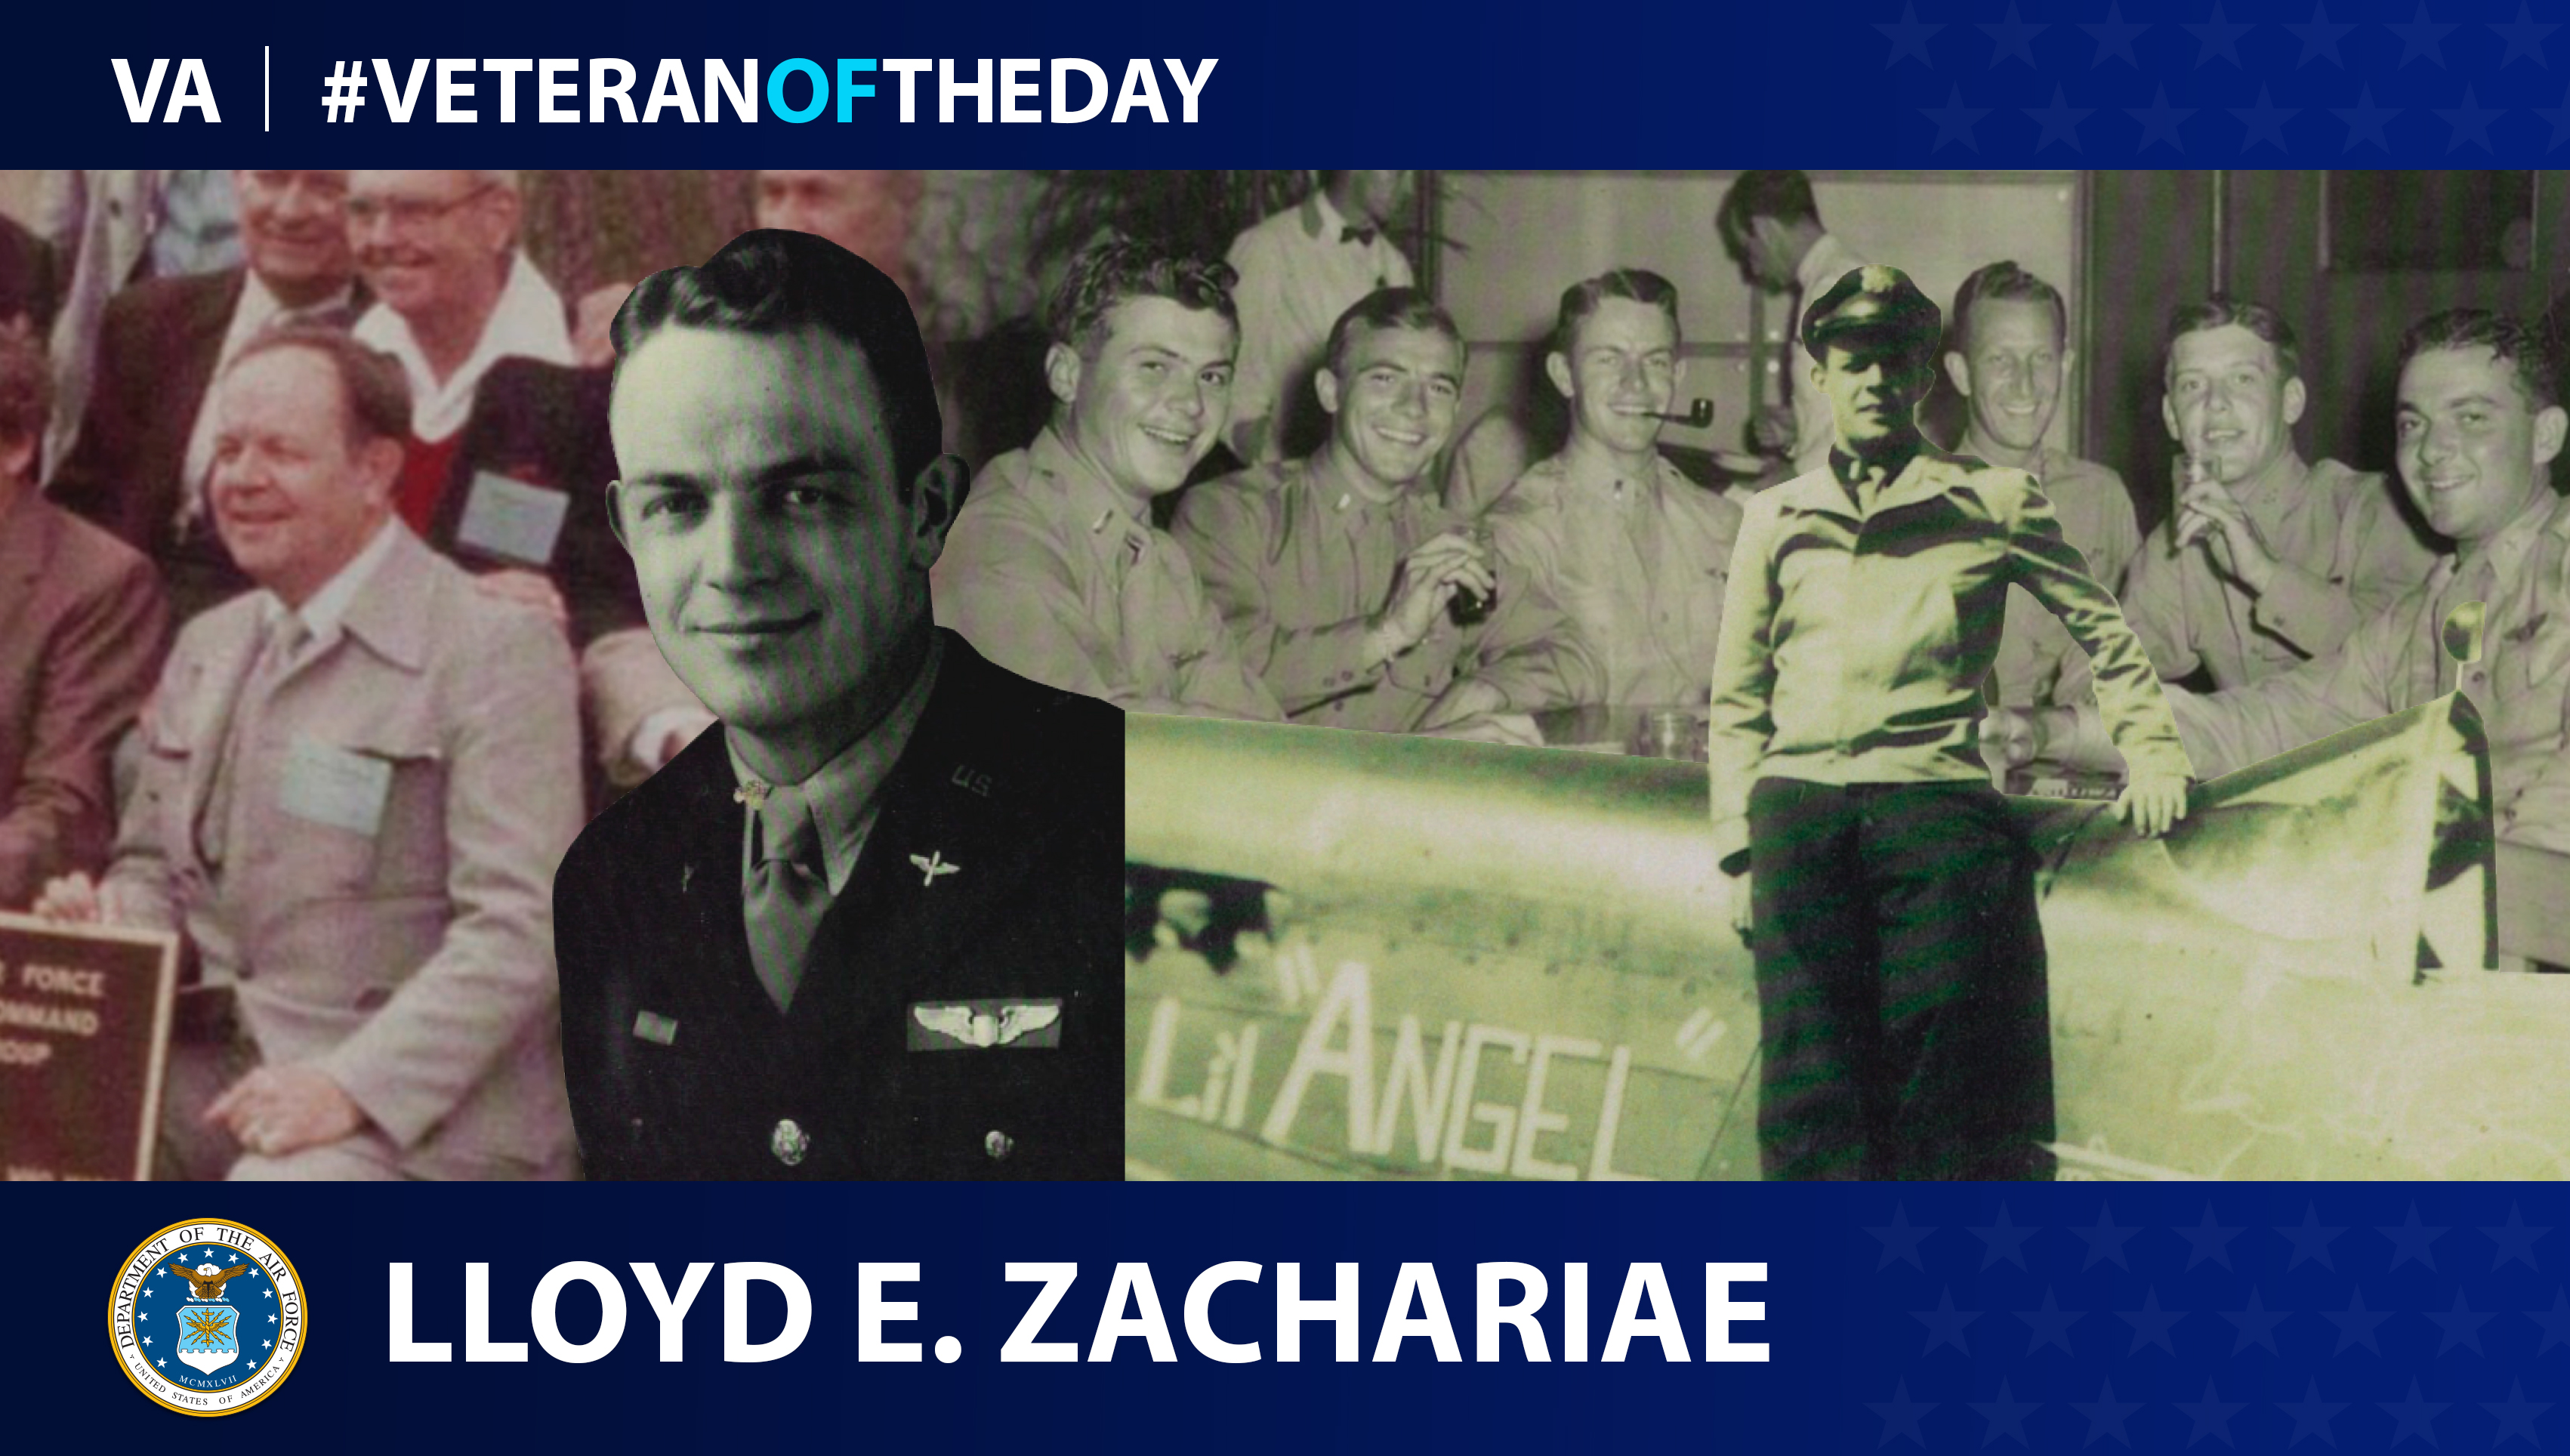 Air Force Veteran Lloyd Elton Zachariae is today's Veteran of the Day.